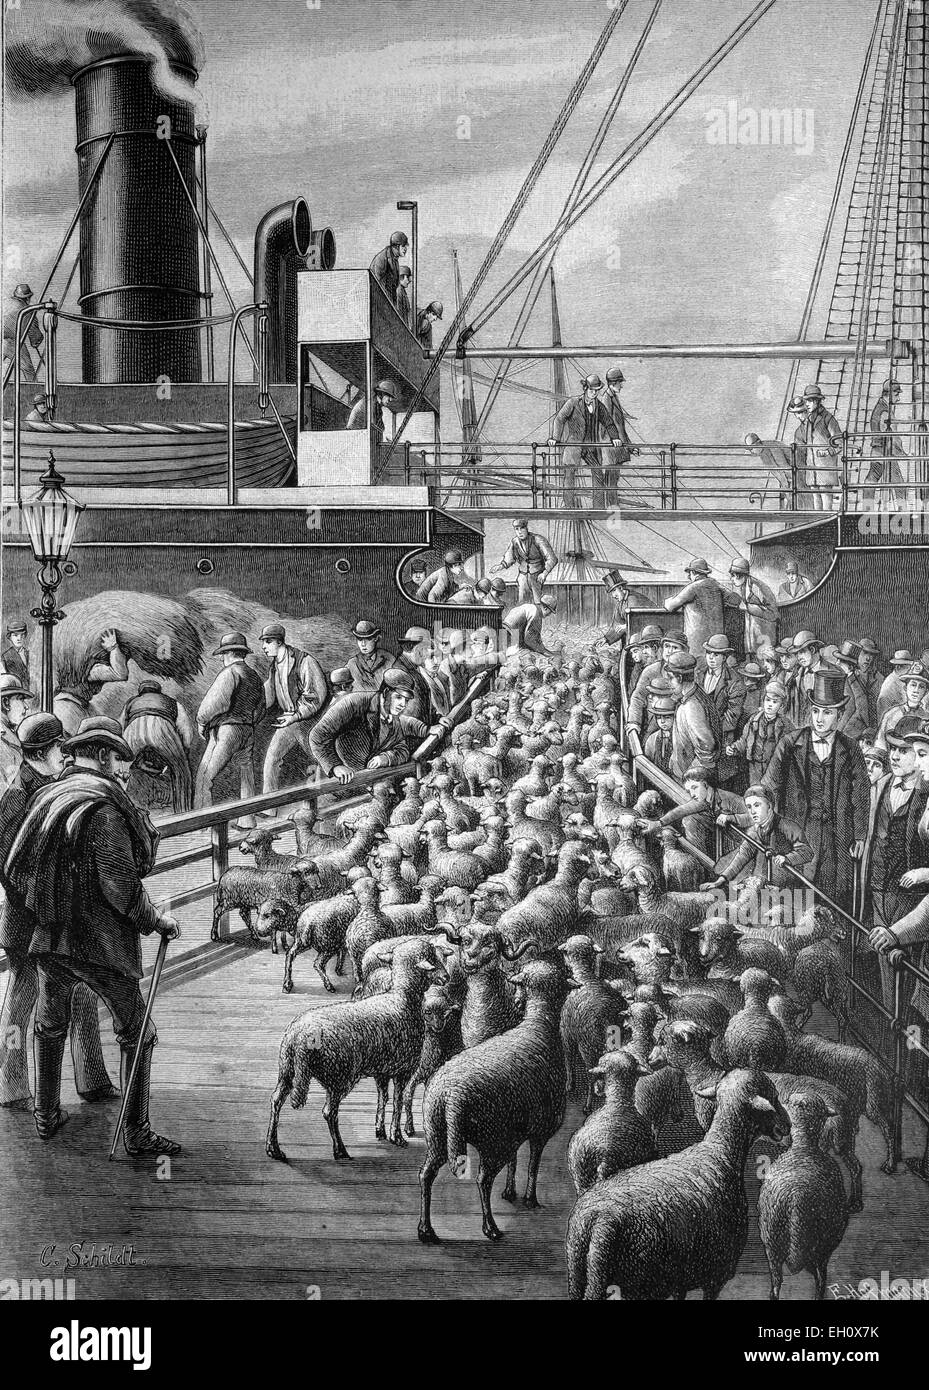 Loading of sheep in the Port of Hamburg, Hamburg, Germany, historical illustration, circa 1886 Stock Photo